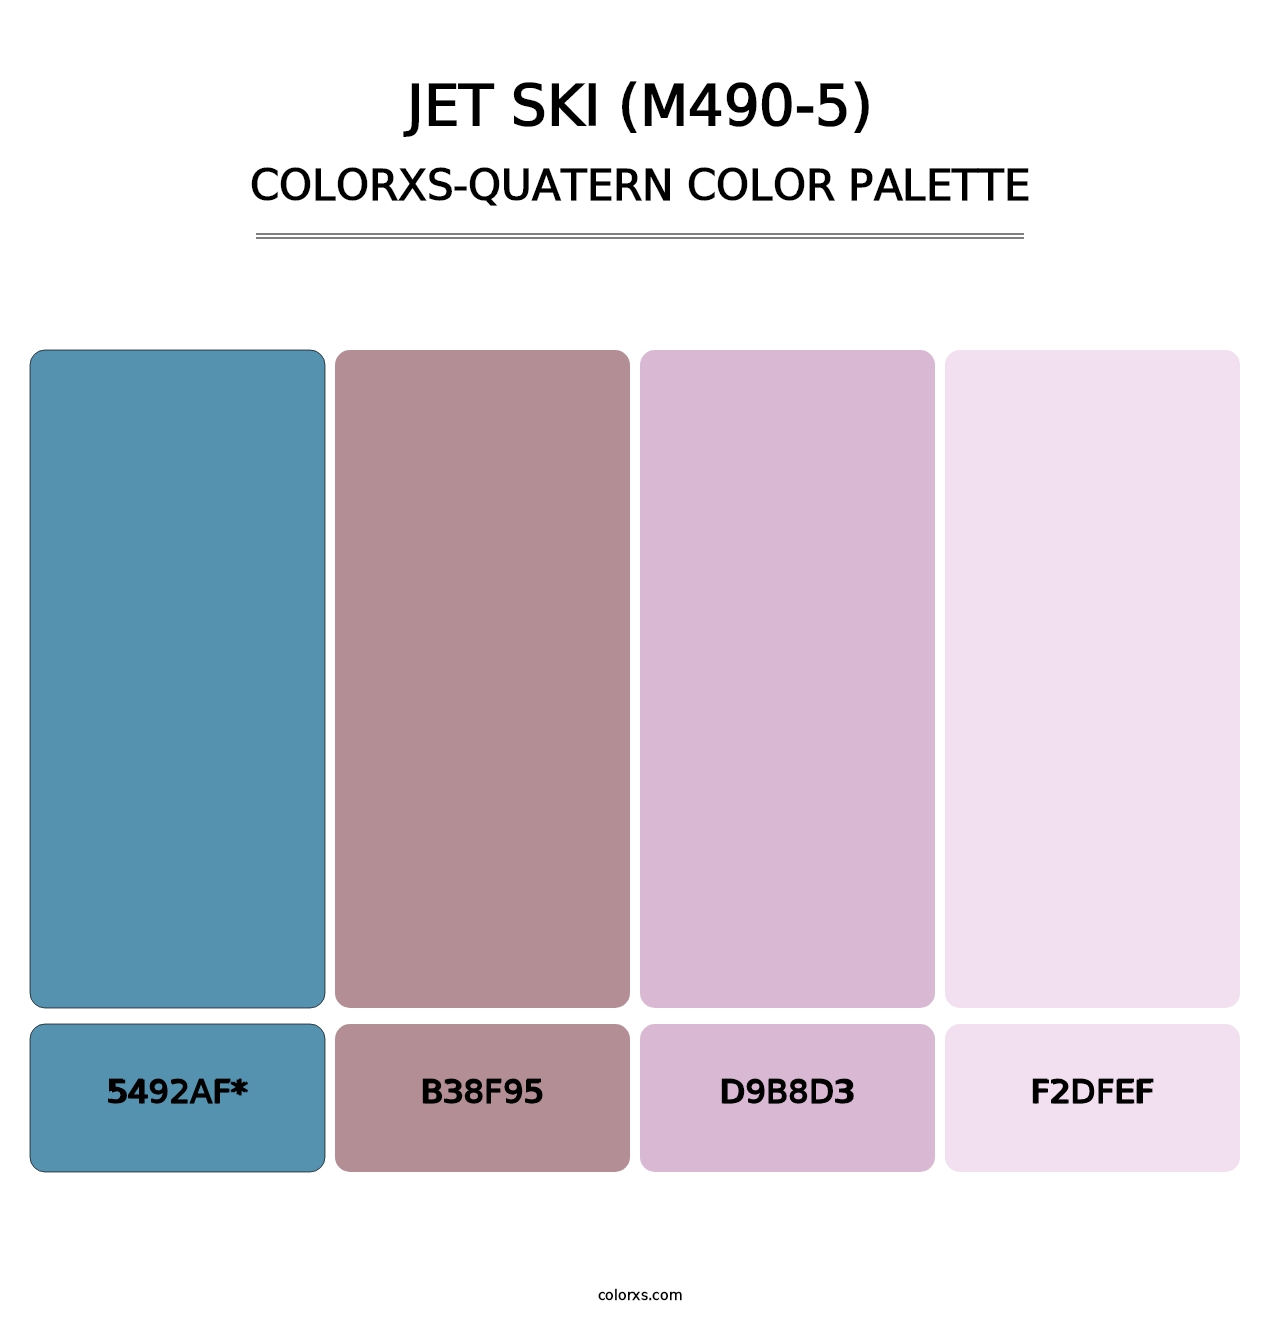 Jet Ski (M490-5) - Colorxs Quatern Palette